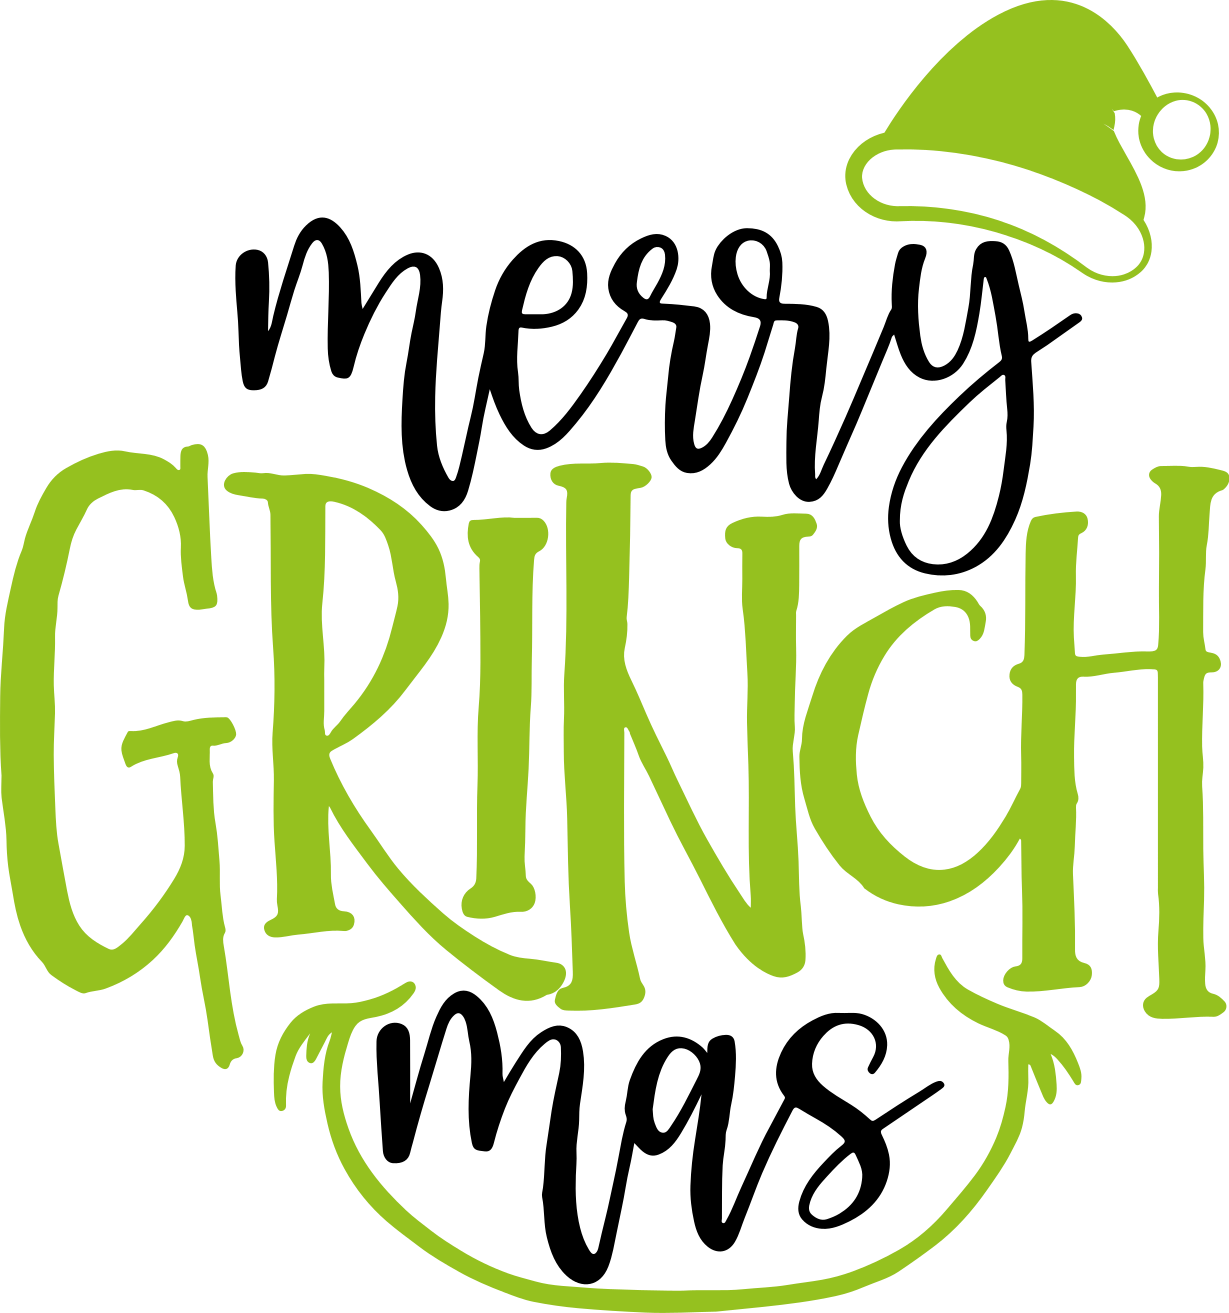 Merry grinchmas original design christmas wall sticker - TenStickers